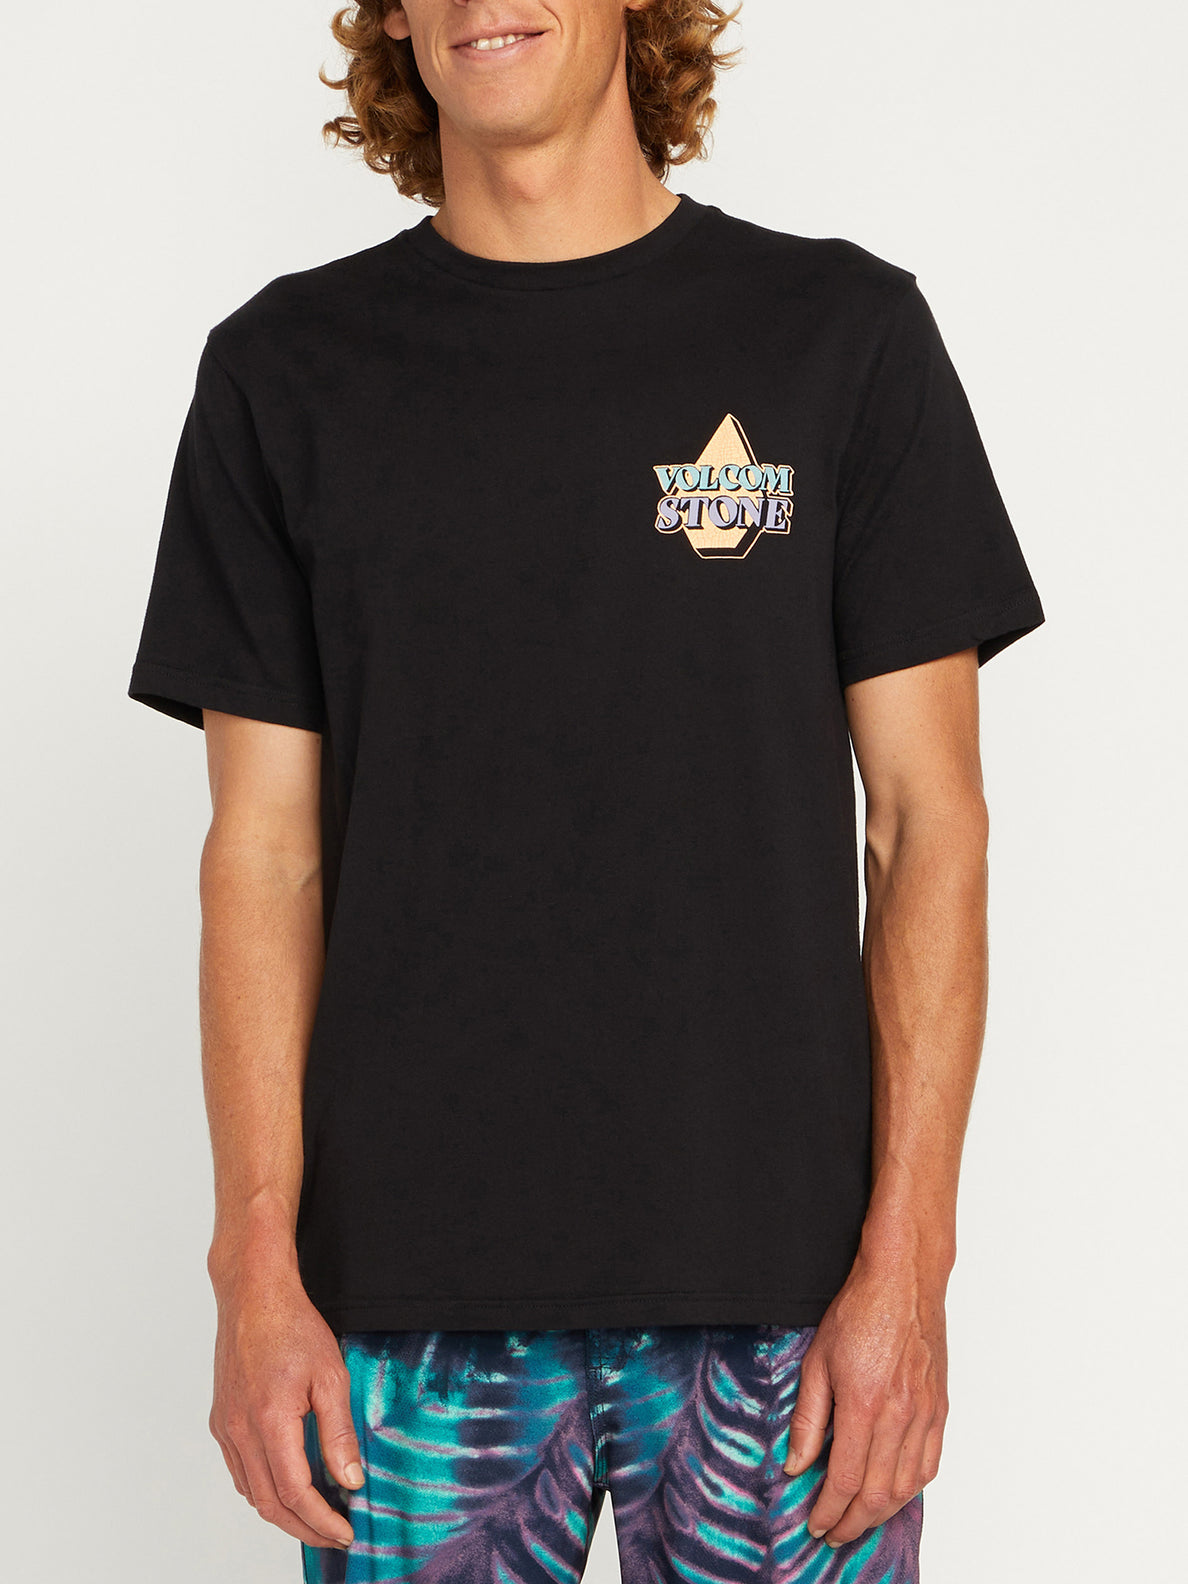 Camiseta Volcom Stript SS - Black | surfdevils.com